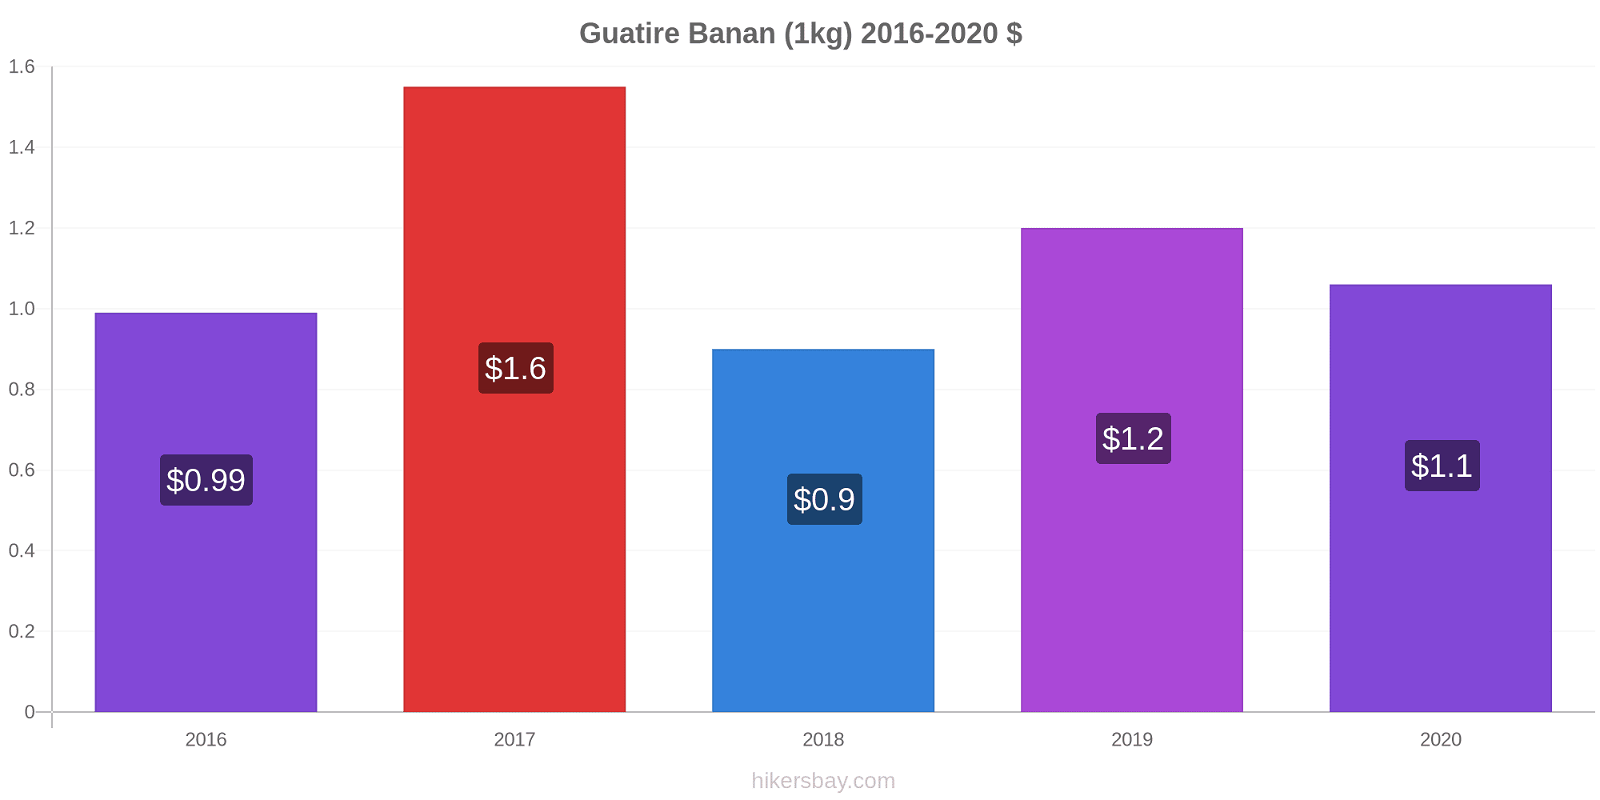 Guatire prisændringer Banan (1kg) hikersbay.com